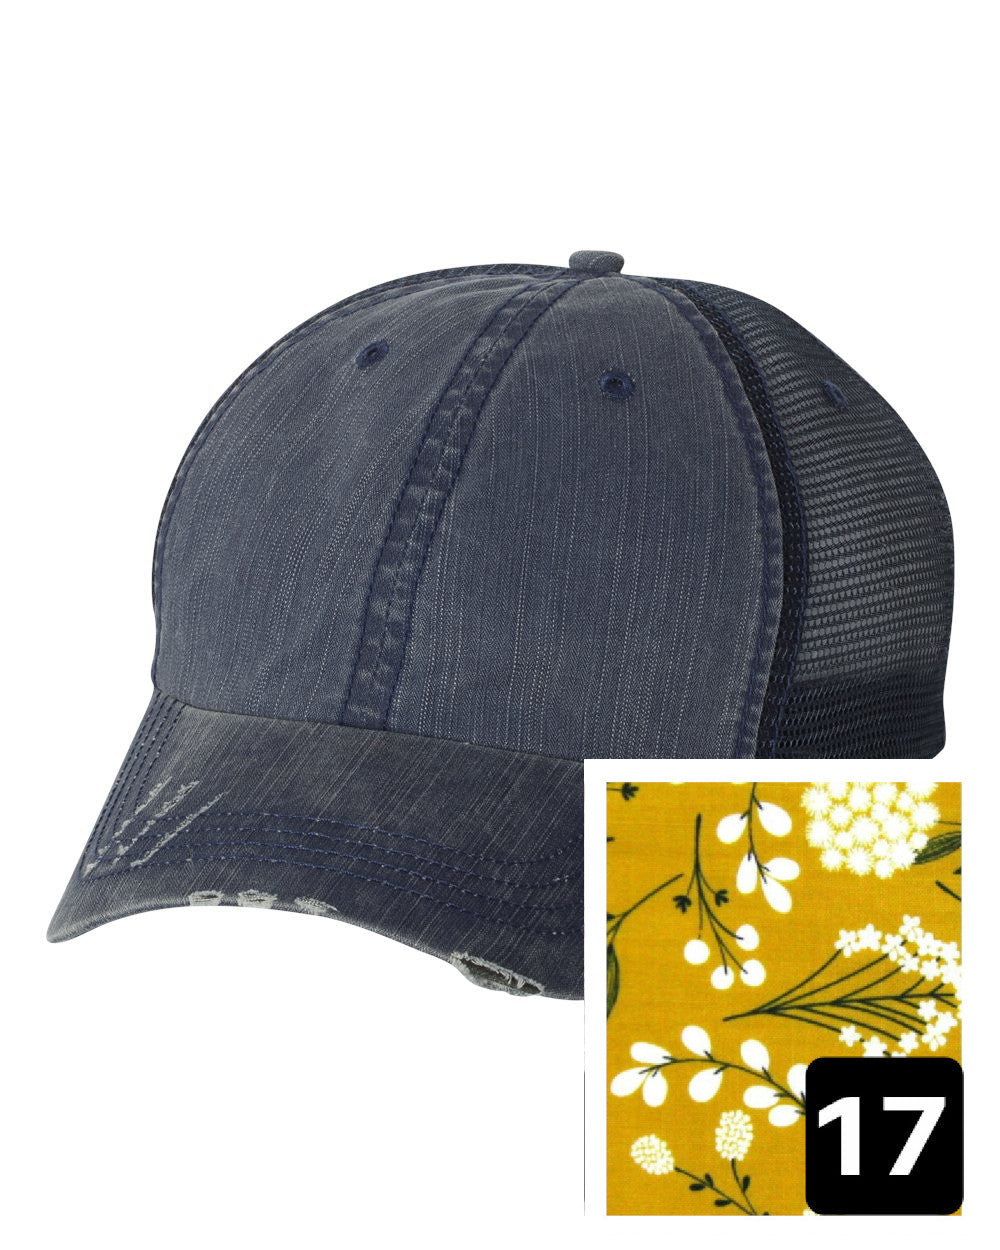 Nevada Hat | Navy Distressed Trucker Cap | Many Fabric Choices